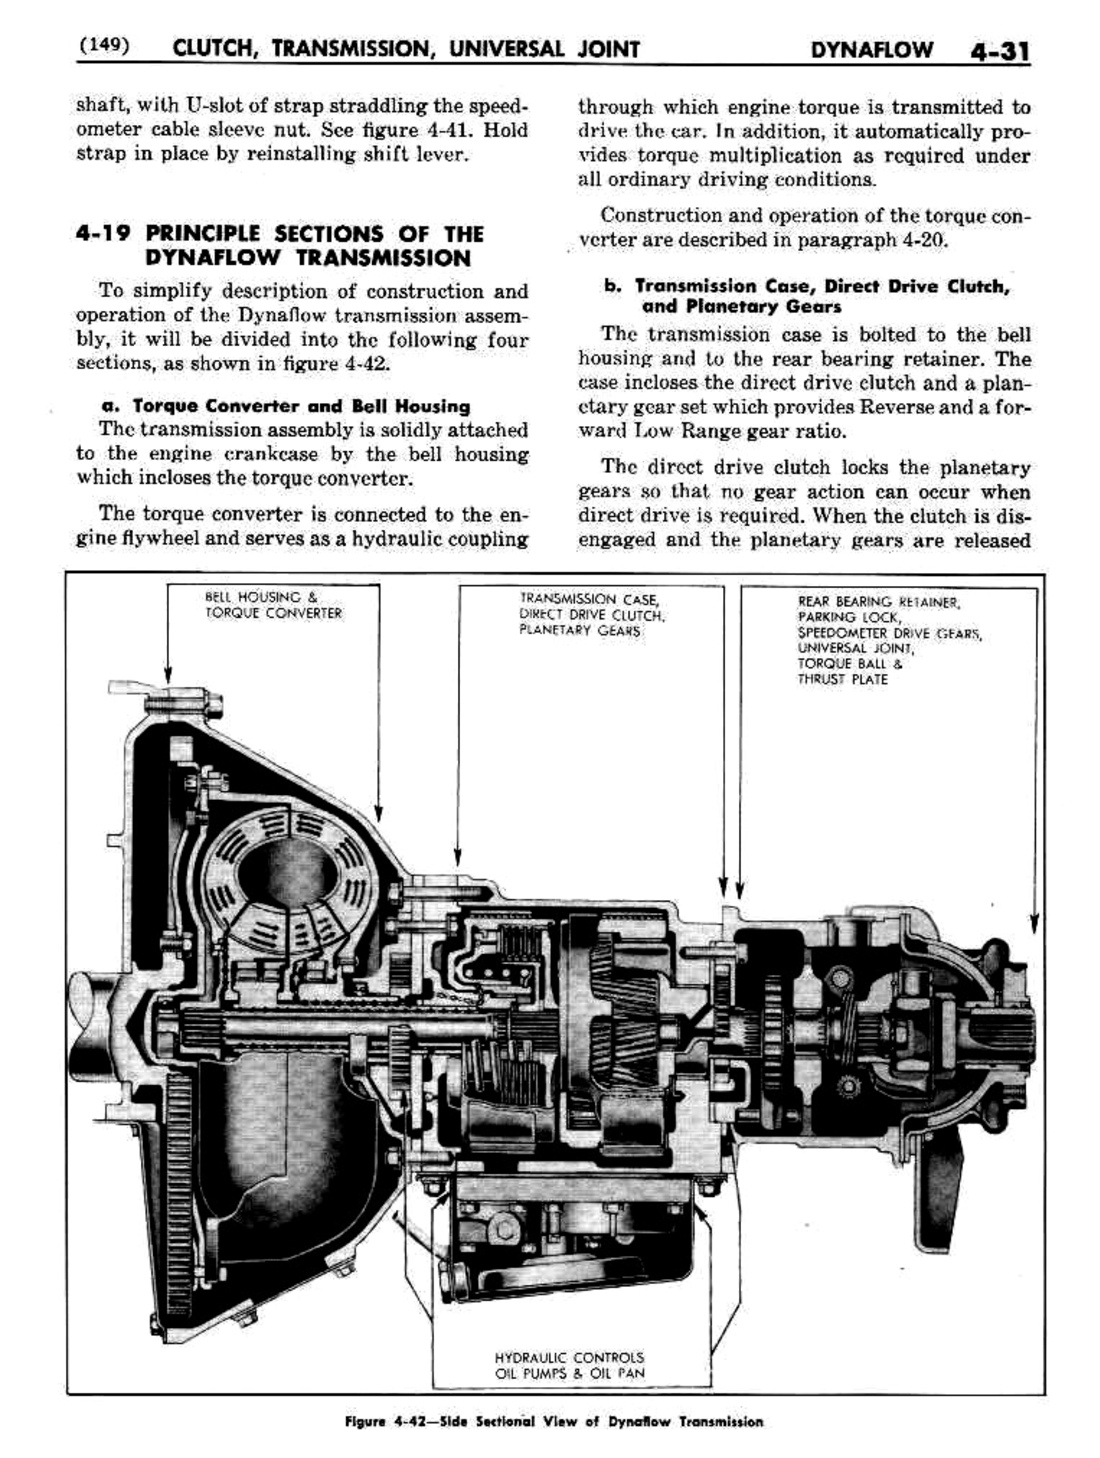 n_05 1951 Buick Shop Manual - Transmission-031-031.jpg